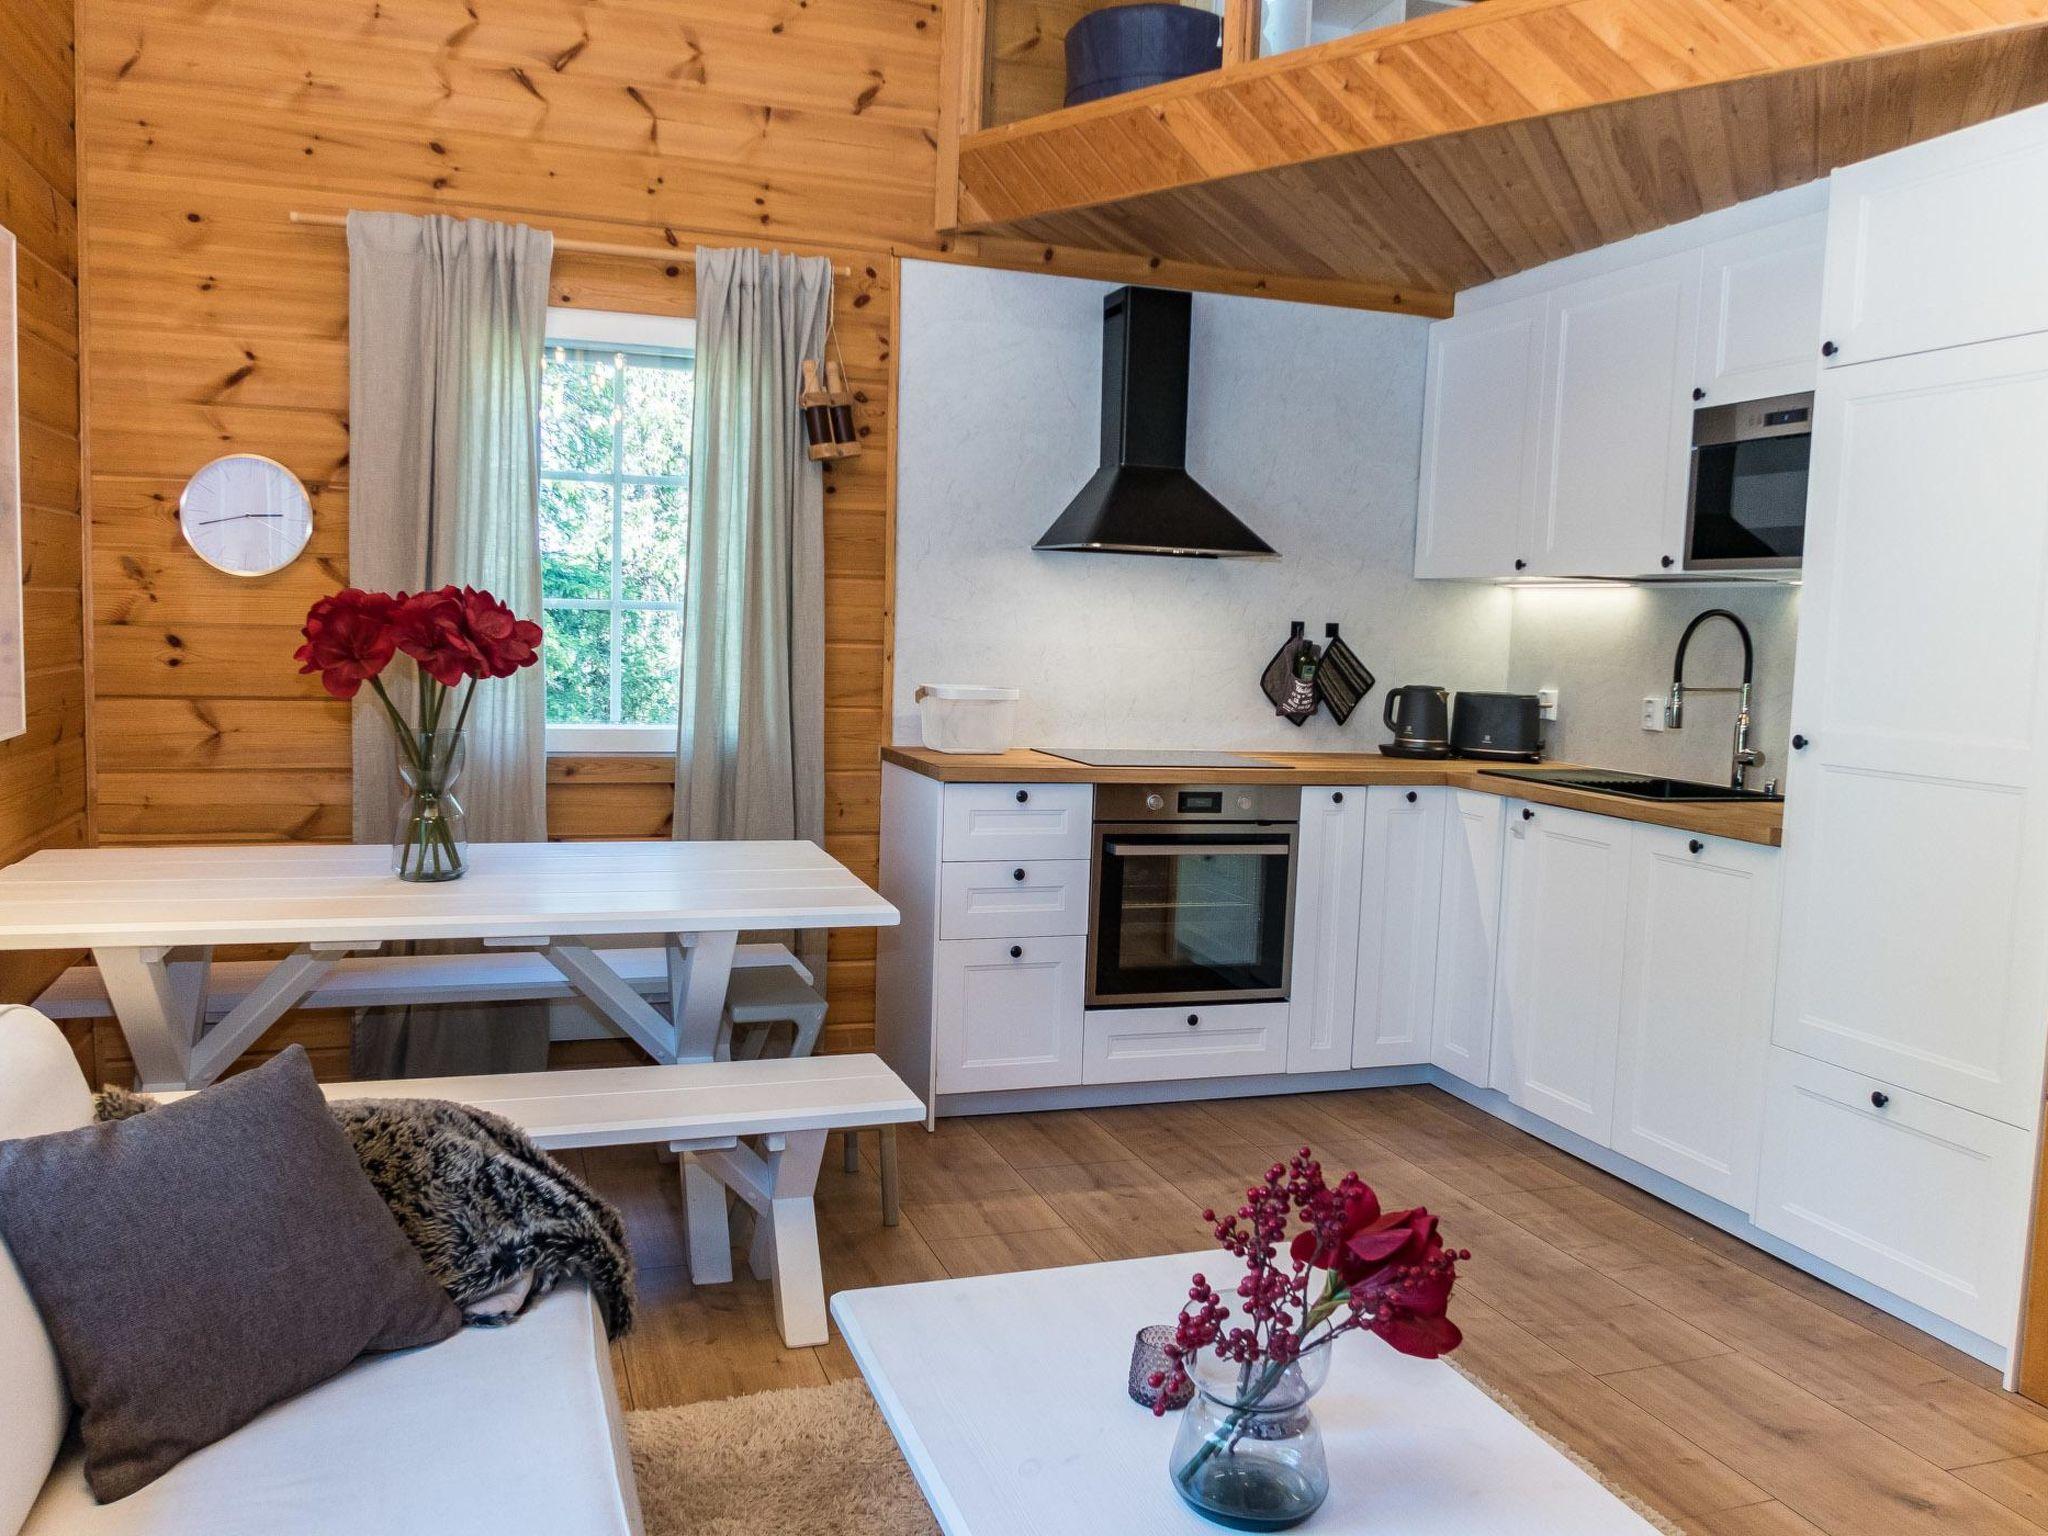 Photo 6 - 4 bedroom House in Kuusamo with sauna and mountain view